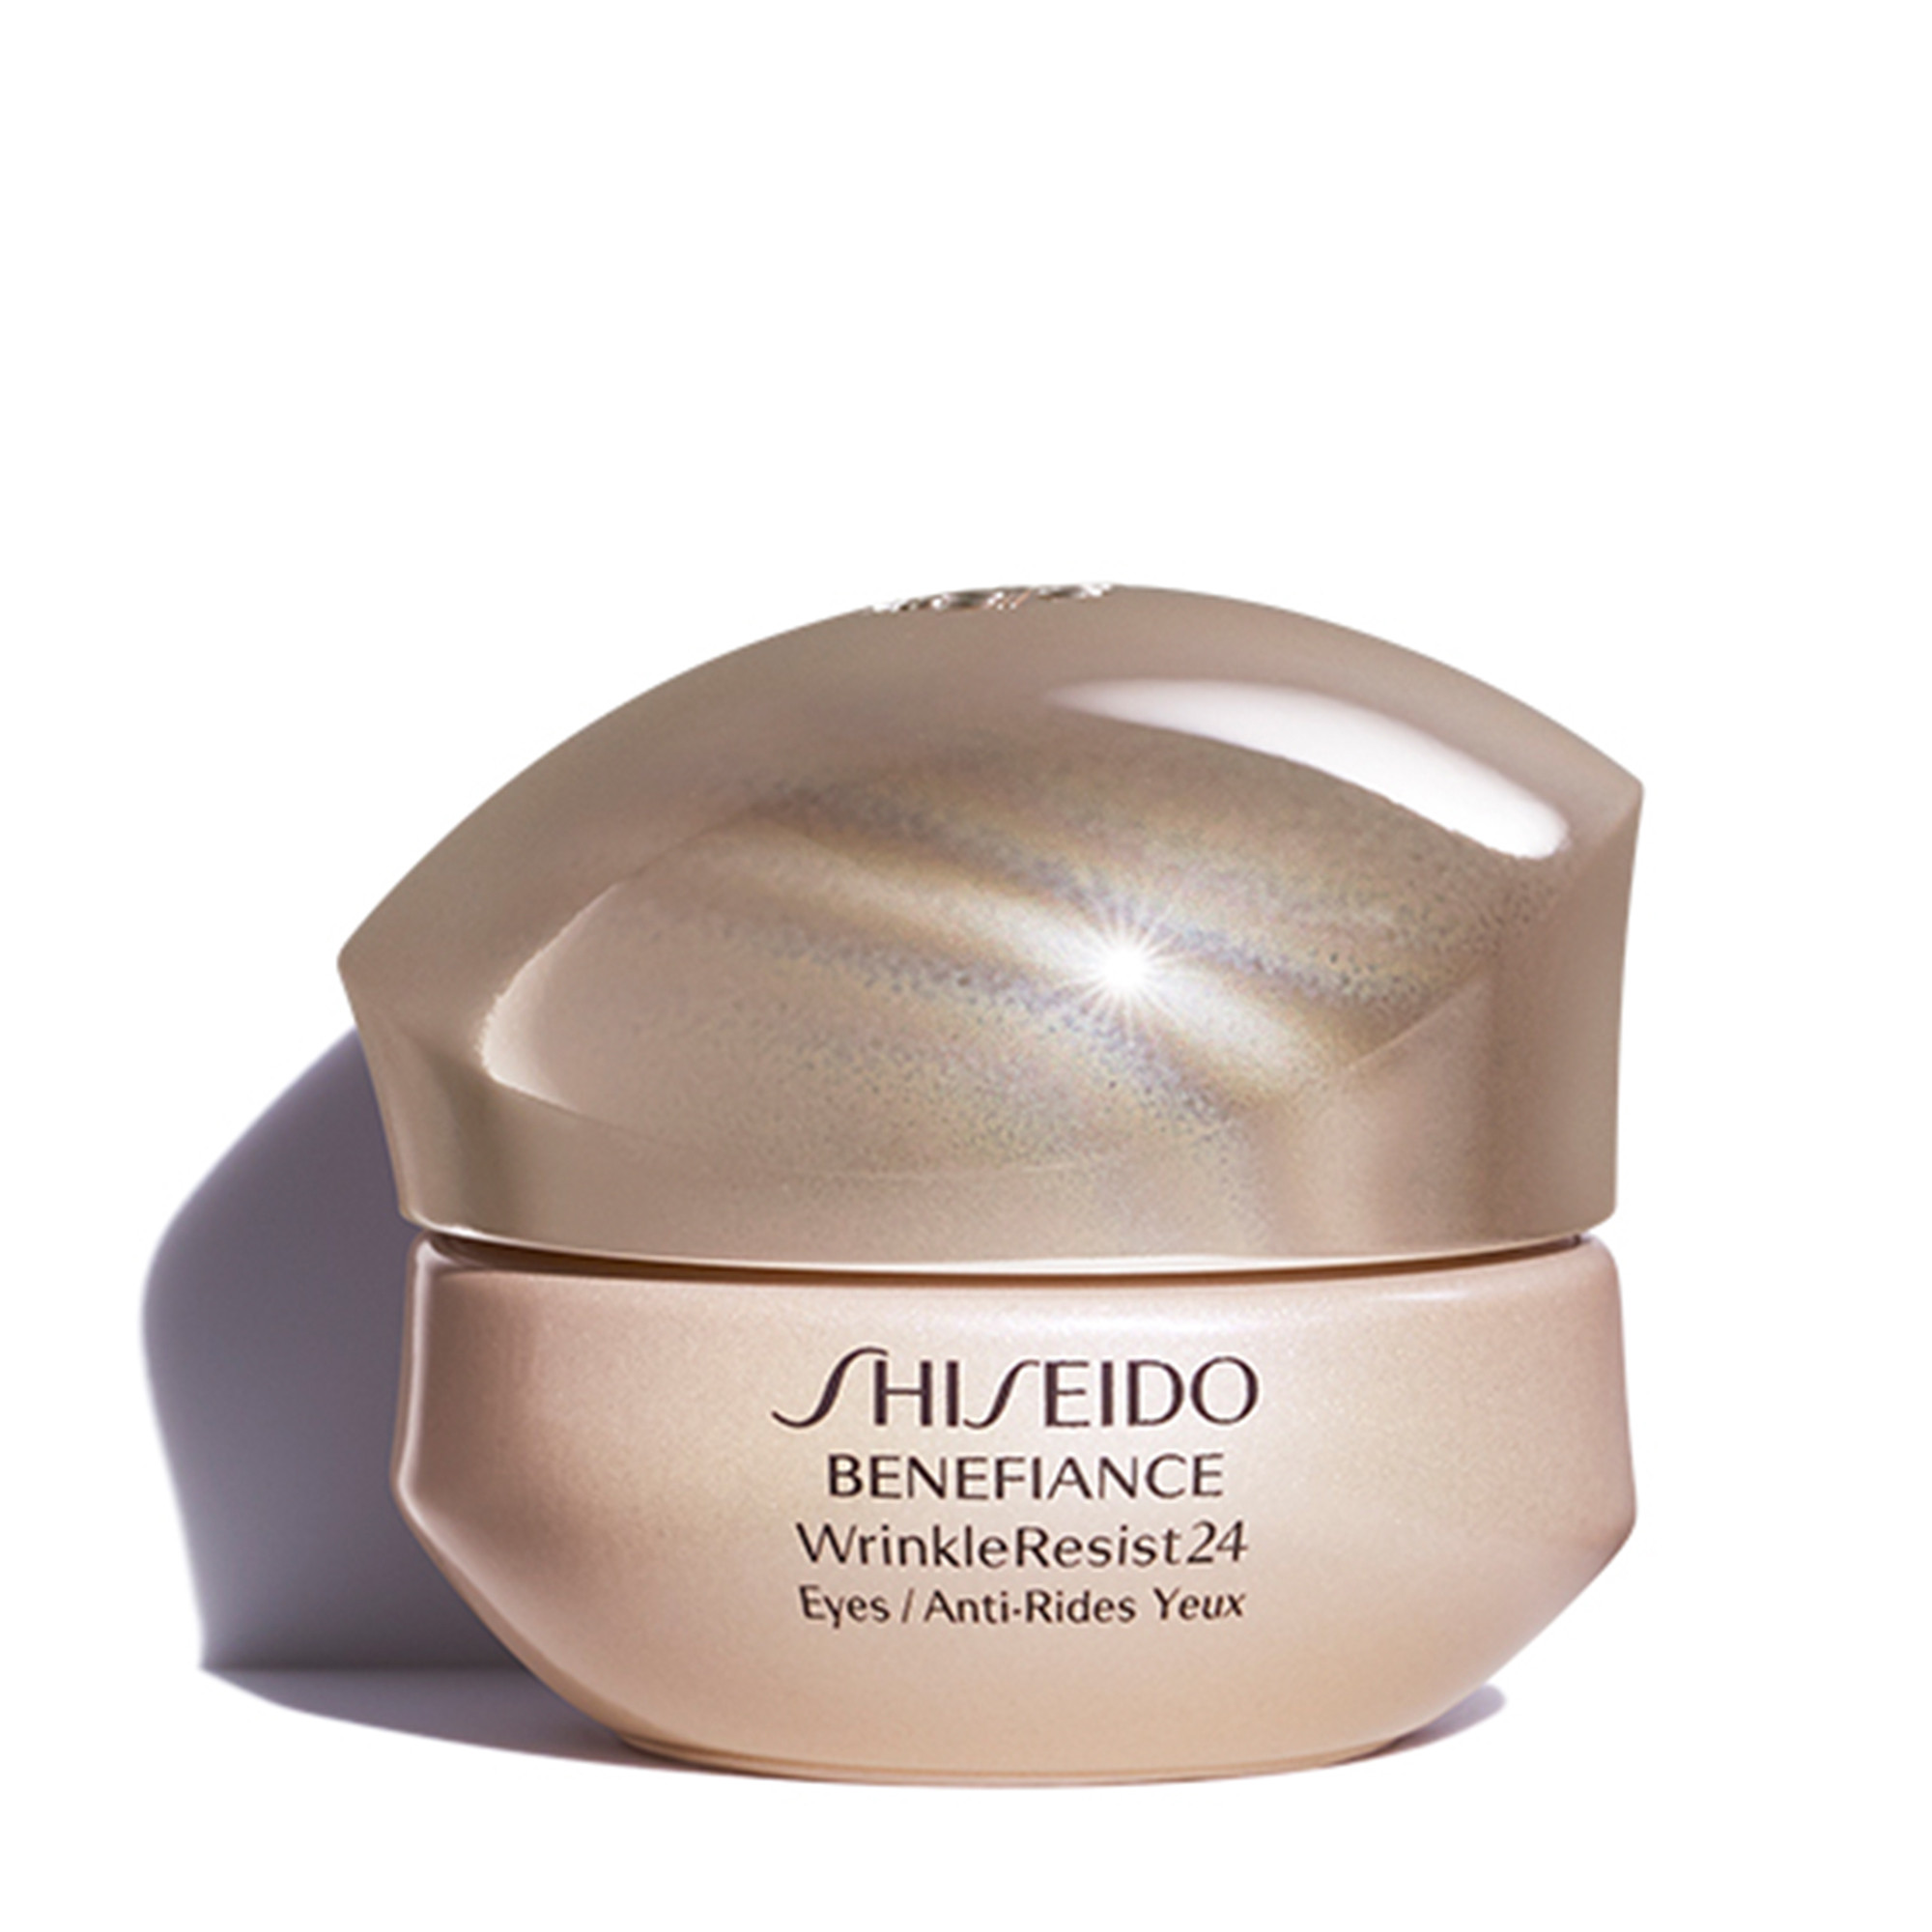 Шисейдо Benefiance Wrinkle resist 24. Shiseido Benefiance Eye. Shiseido Benefiance для глаз. Shiseido Benefiance Anti Wrinkle. Shiseido benefiance wrinkle